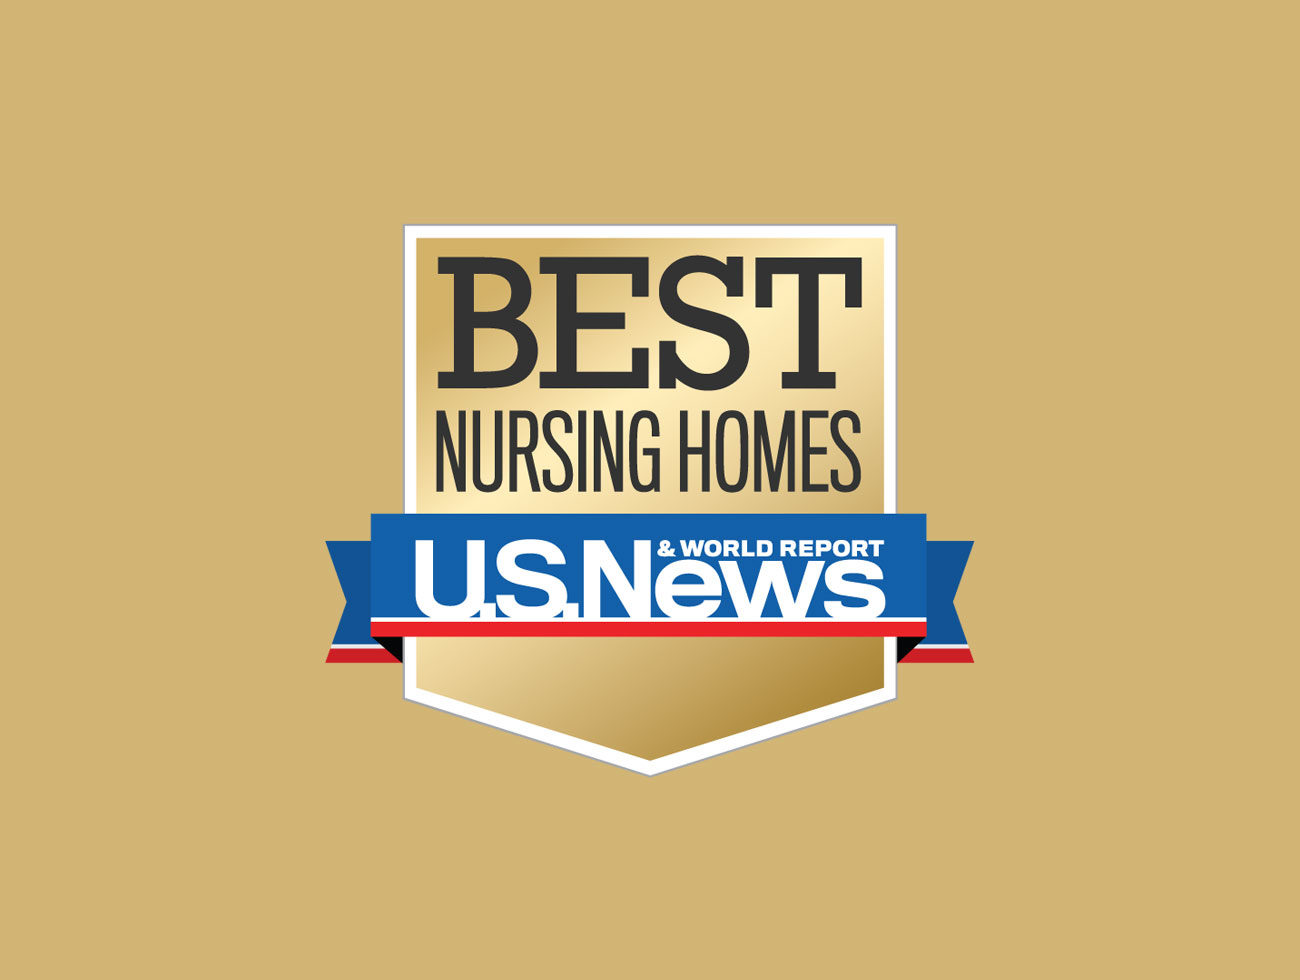 Best Nursing Homes - US News & World Report